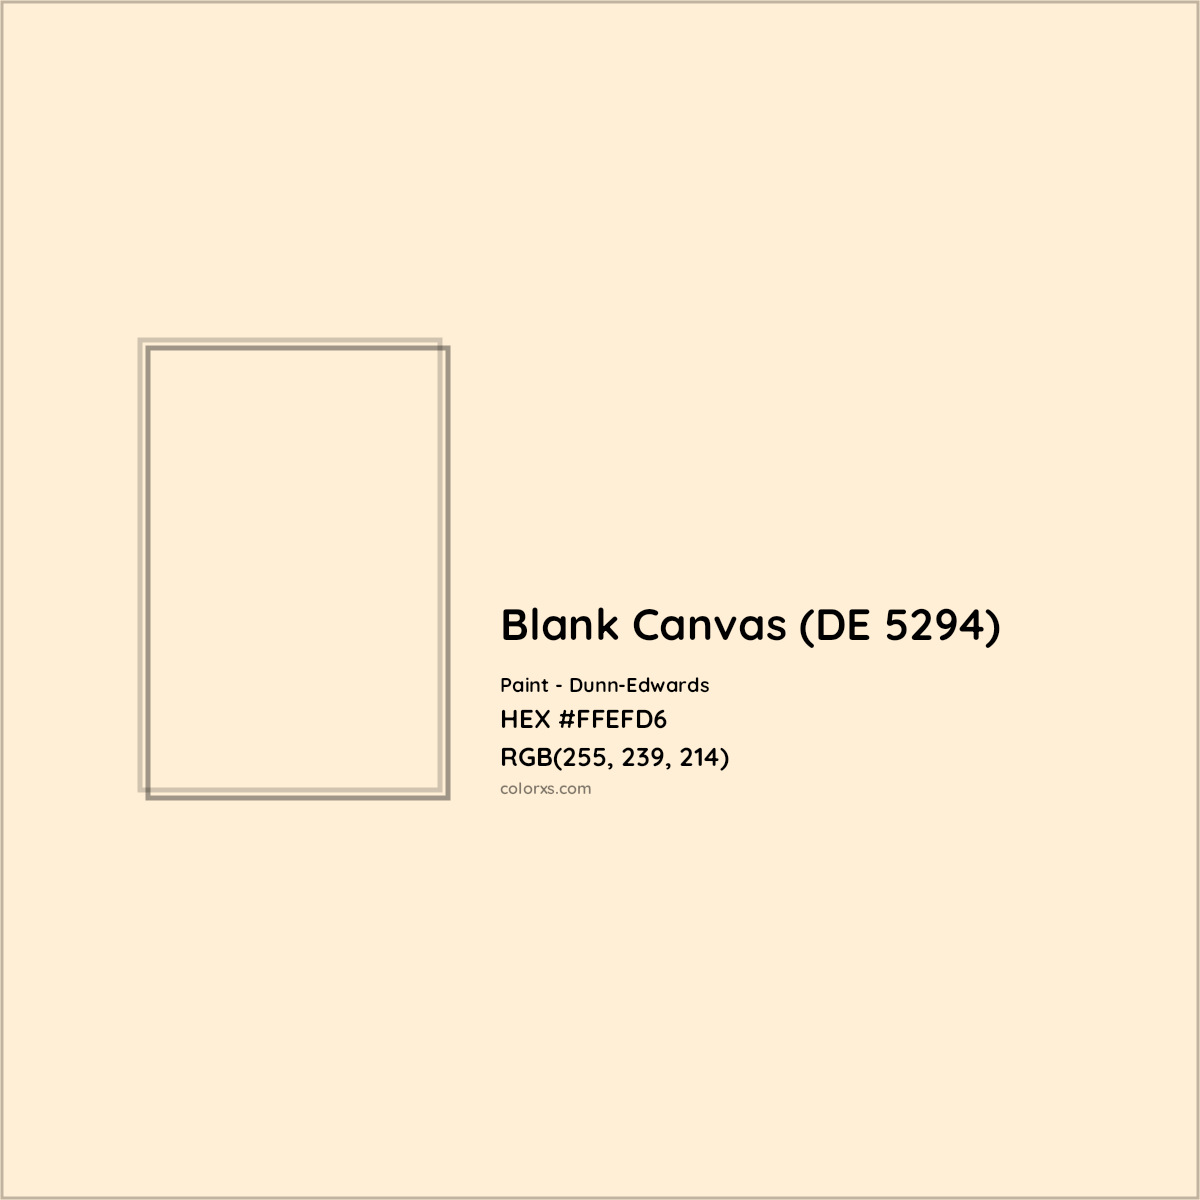 HEX #FFEFD6 Blank Canvas (DE 5294) Paint Dunn-Edwards - Color Code